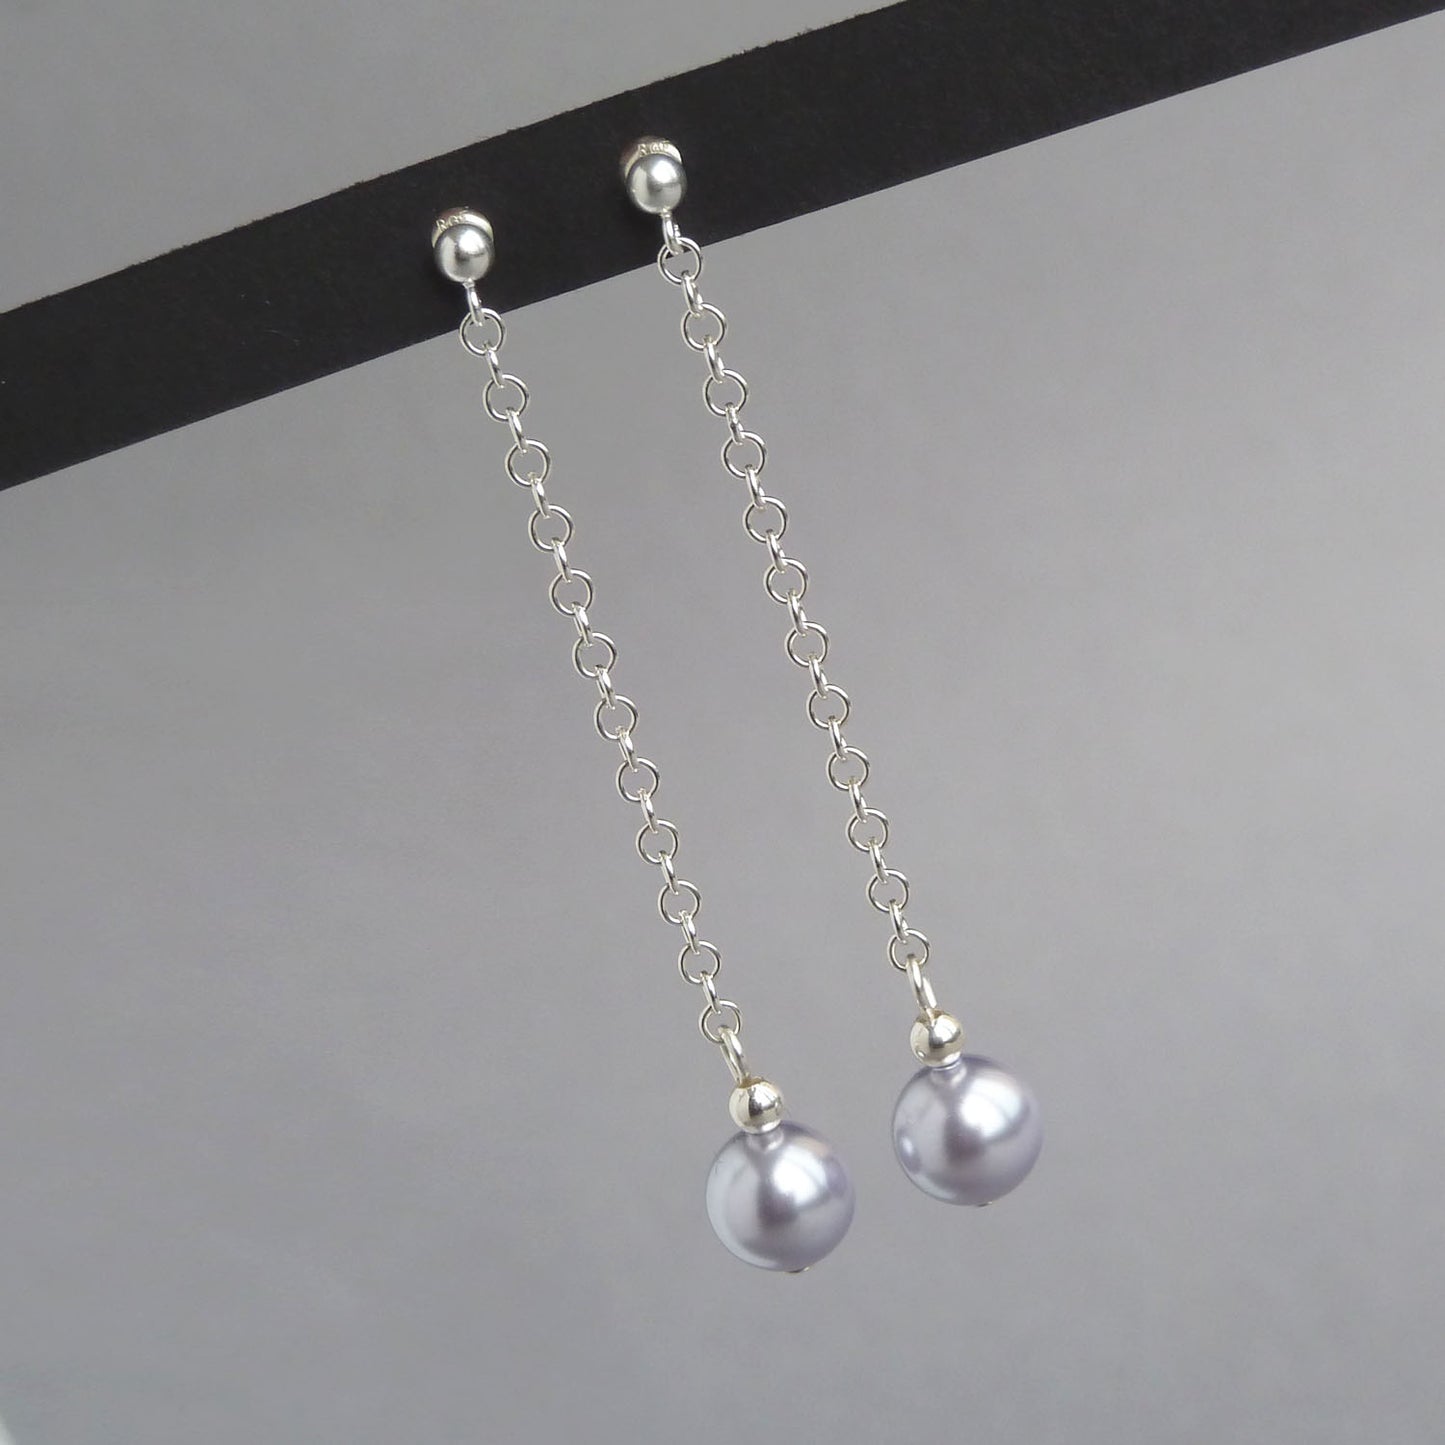 Lavender pearl bridesmaids earrings